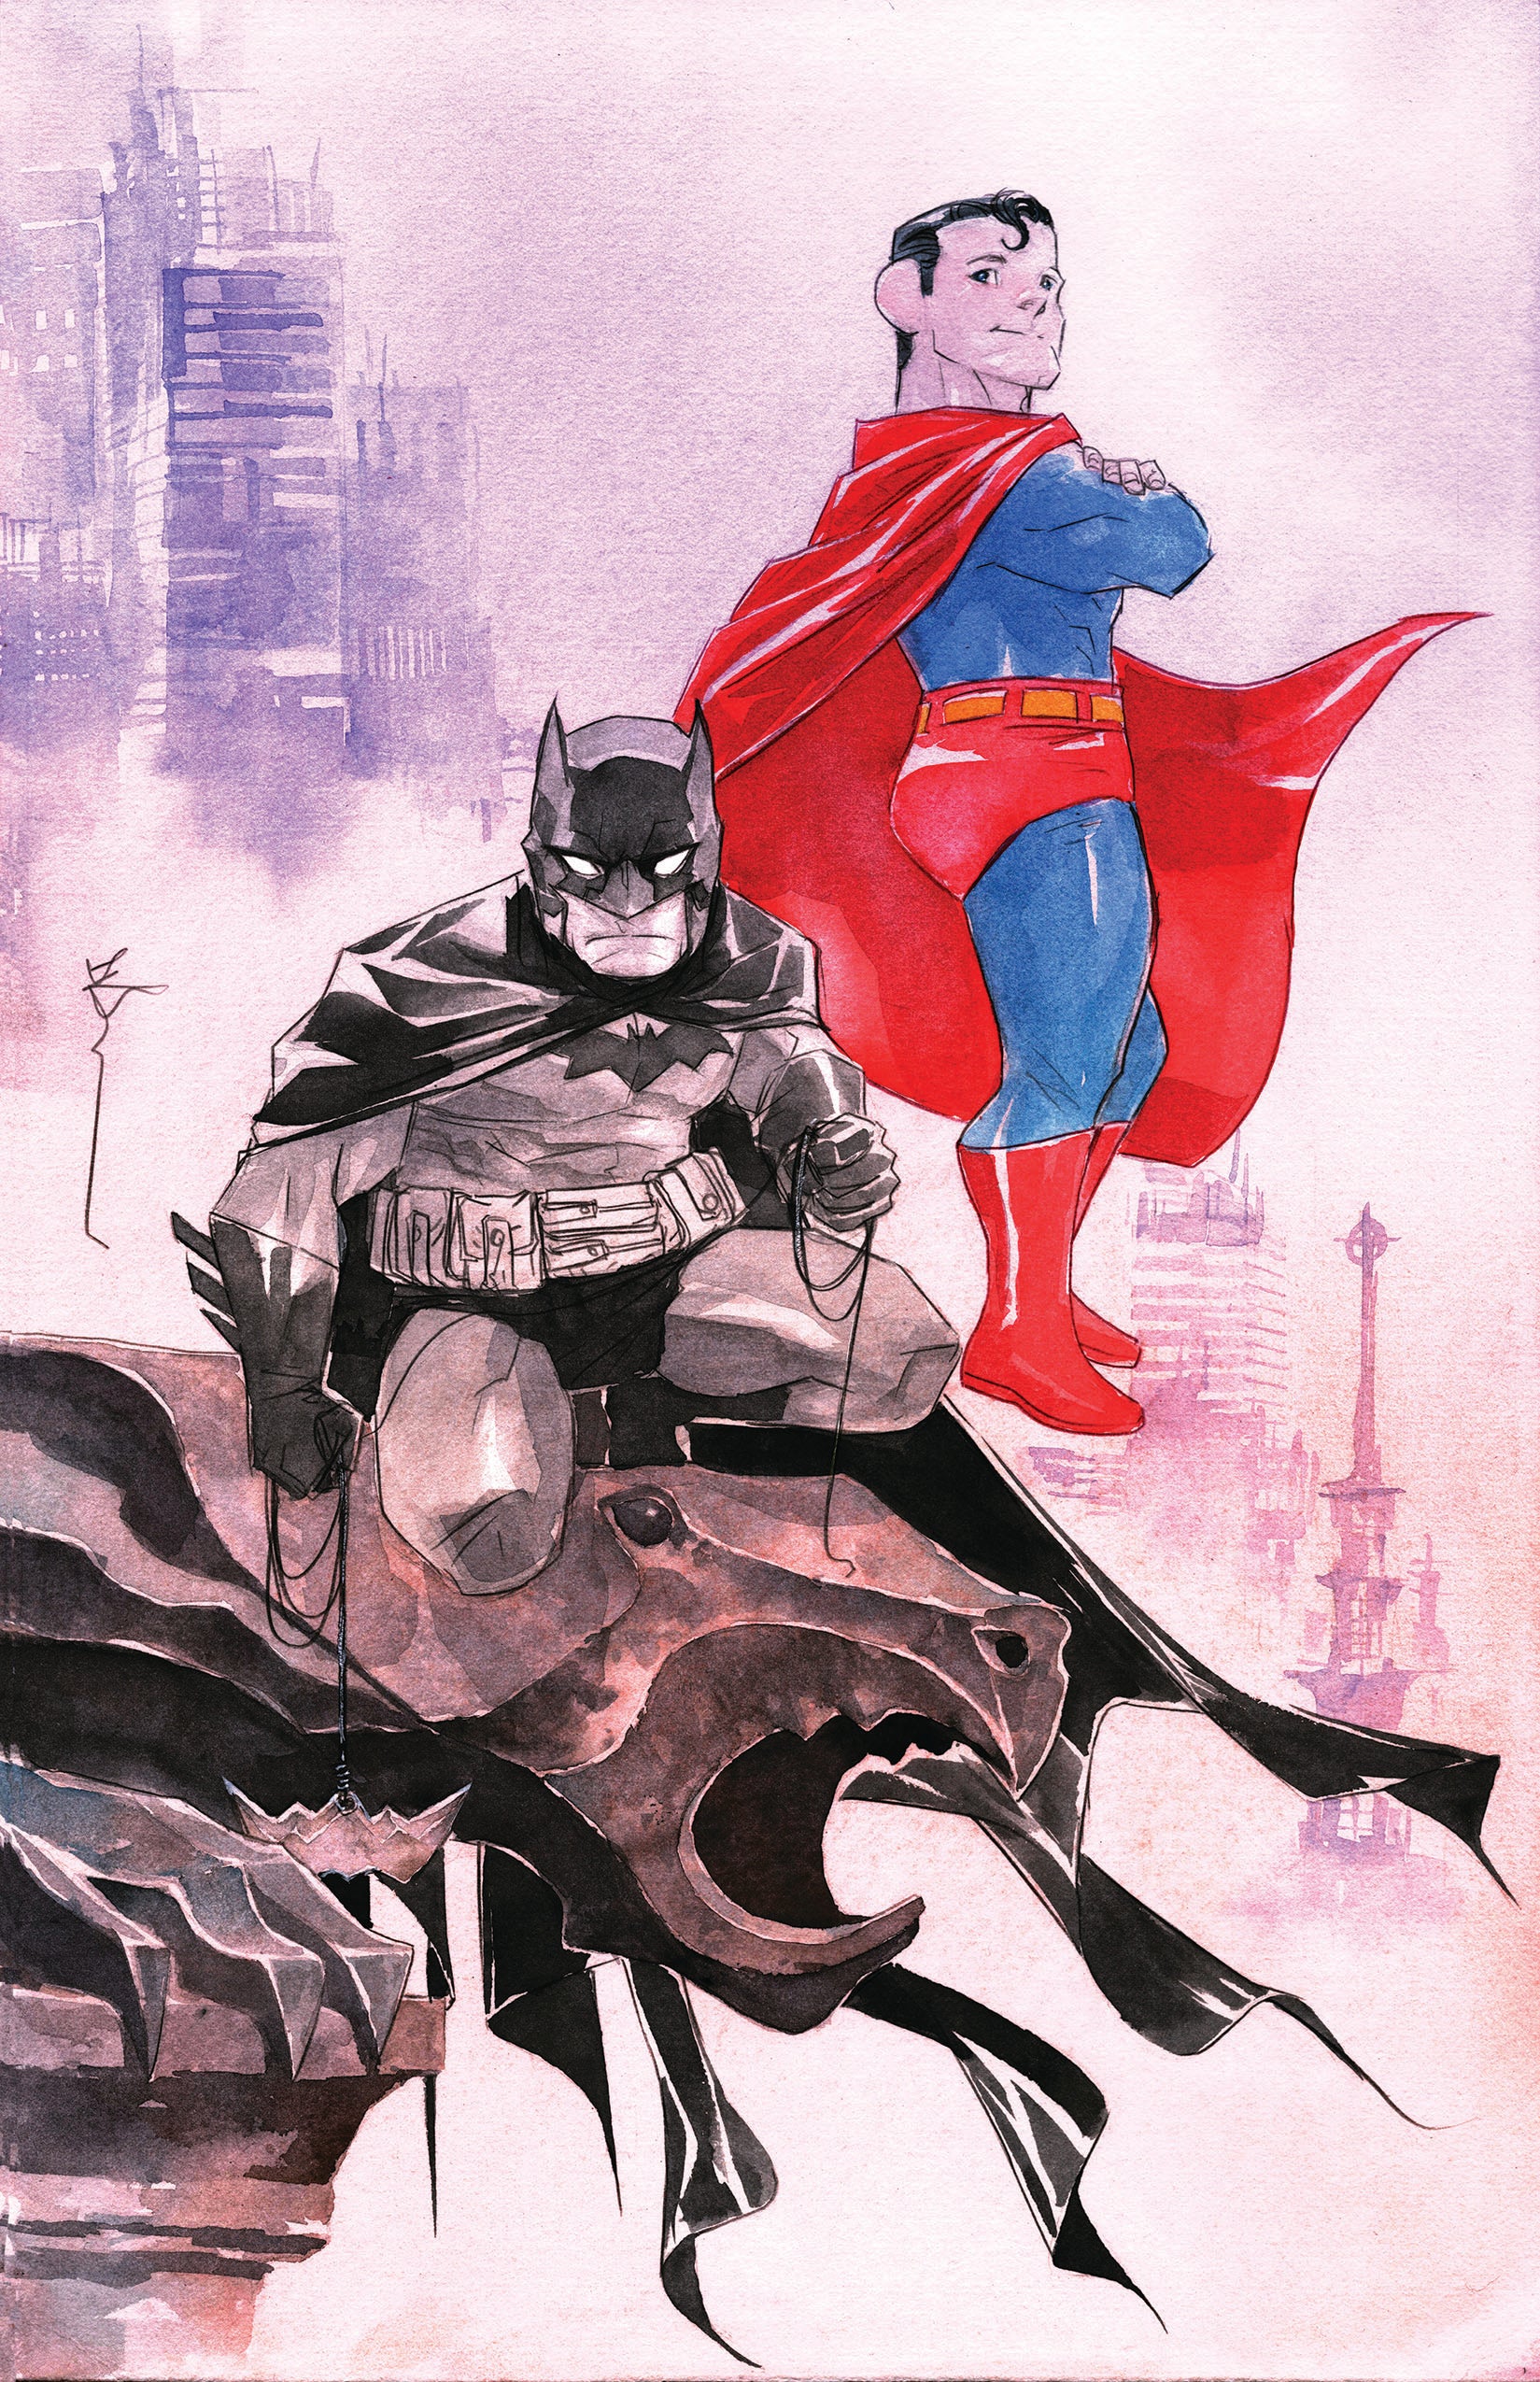 BATMAN SUPERMAN WORLDS FINEST #25 COVER C DUSTIN NGUYEN CARD STOCK VARIANT